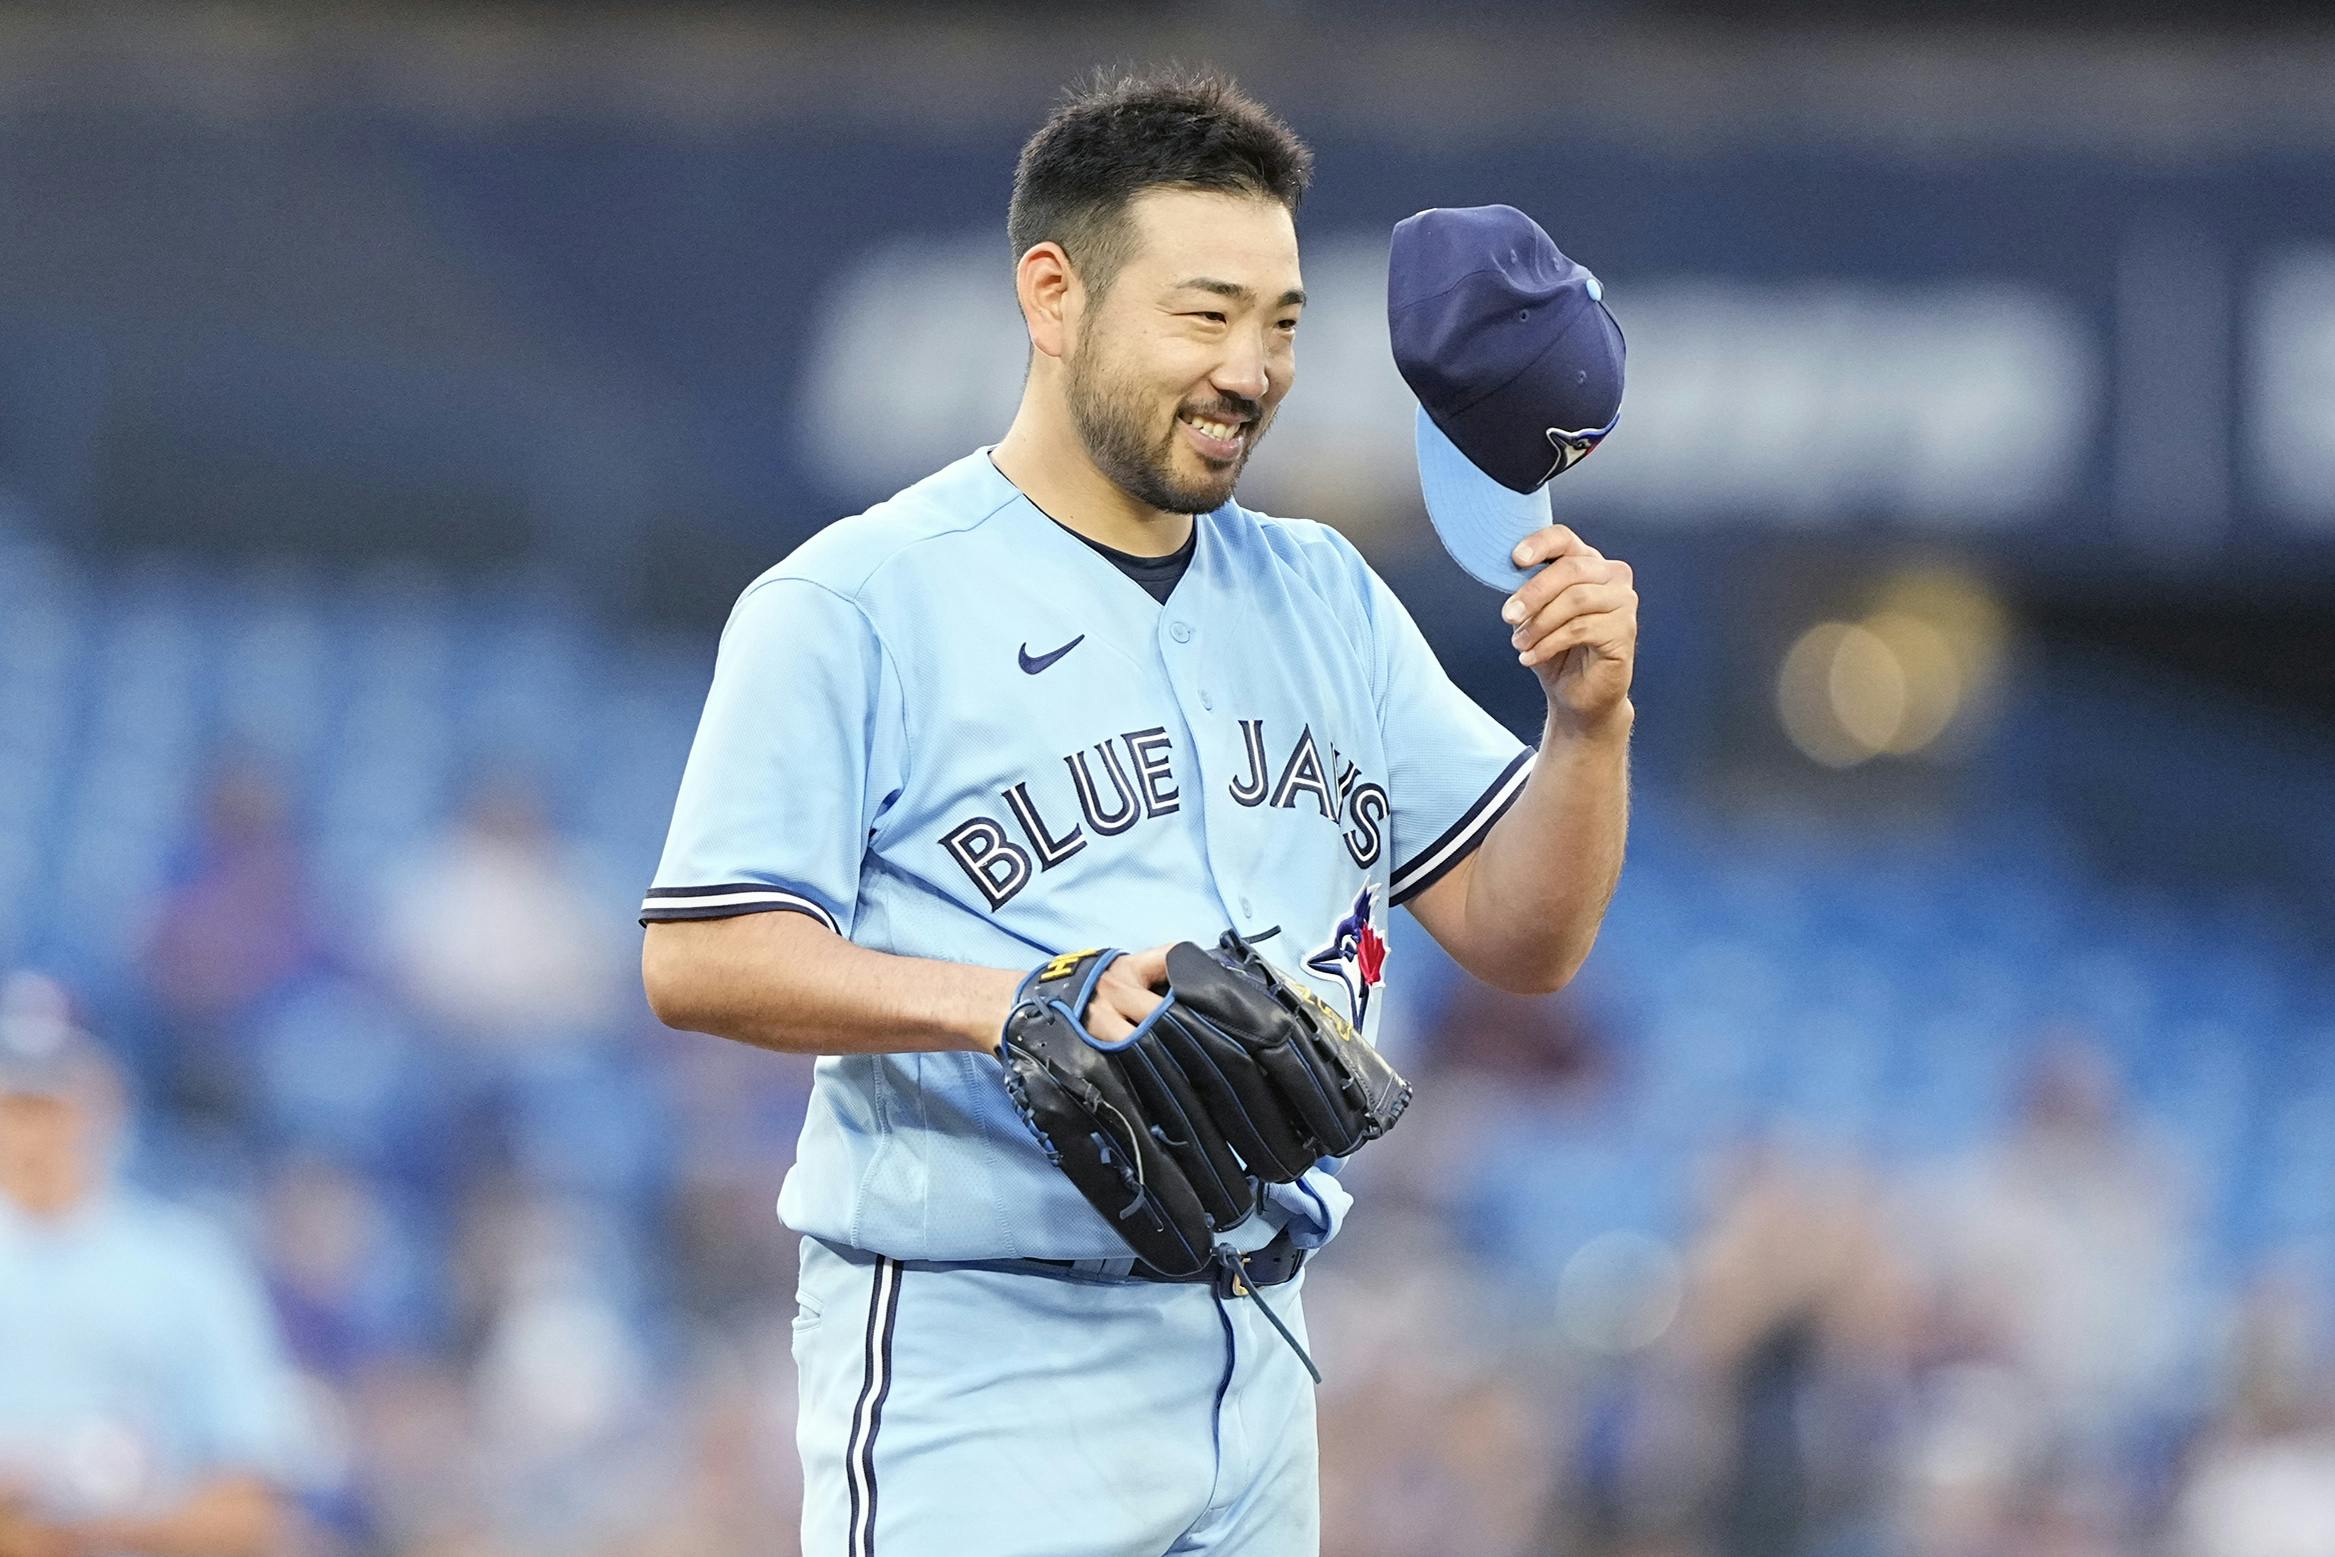 Yusei Kikuchi will get the start on Canada Day for the Blue Jays -  BlueJaysNation